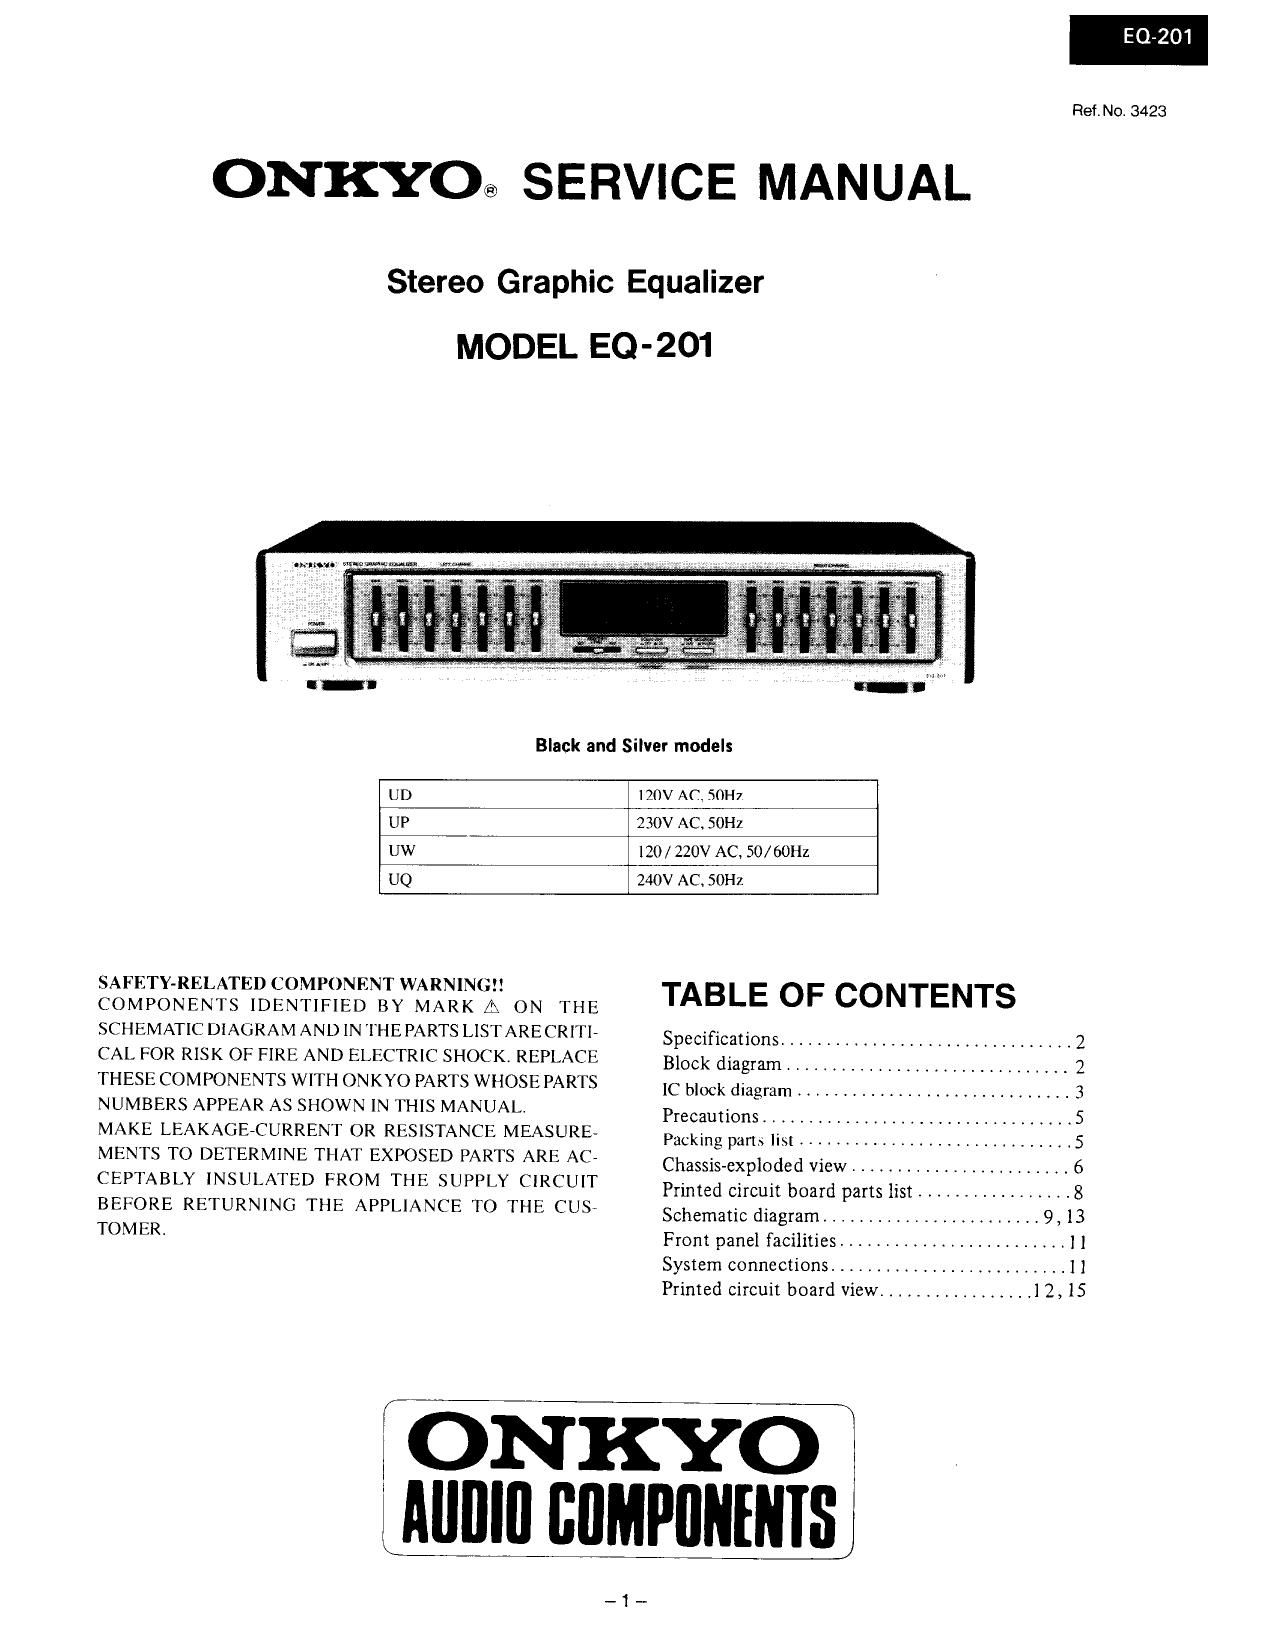 Onkyo EQ 201 Service Manual